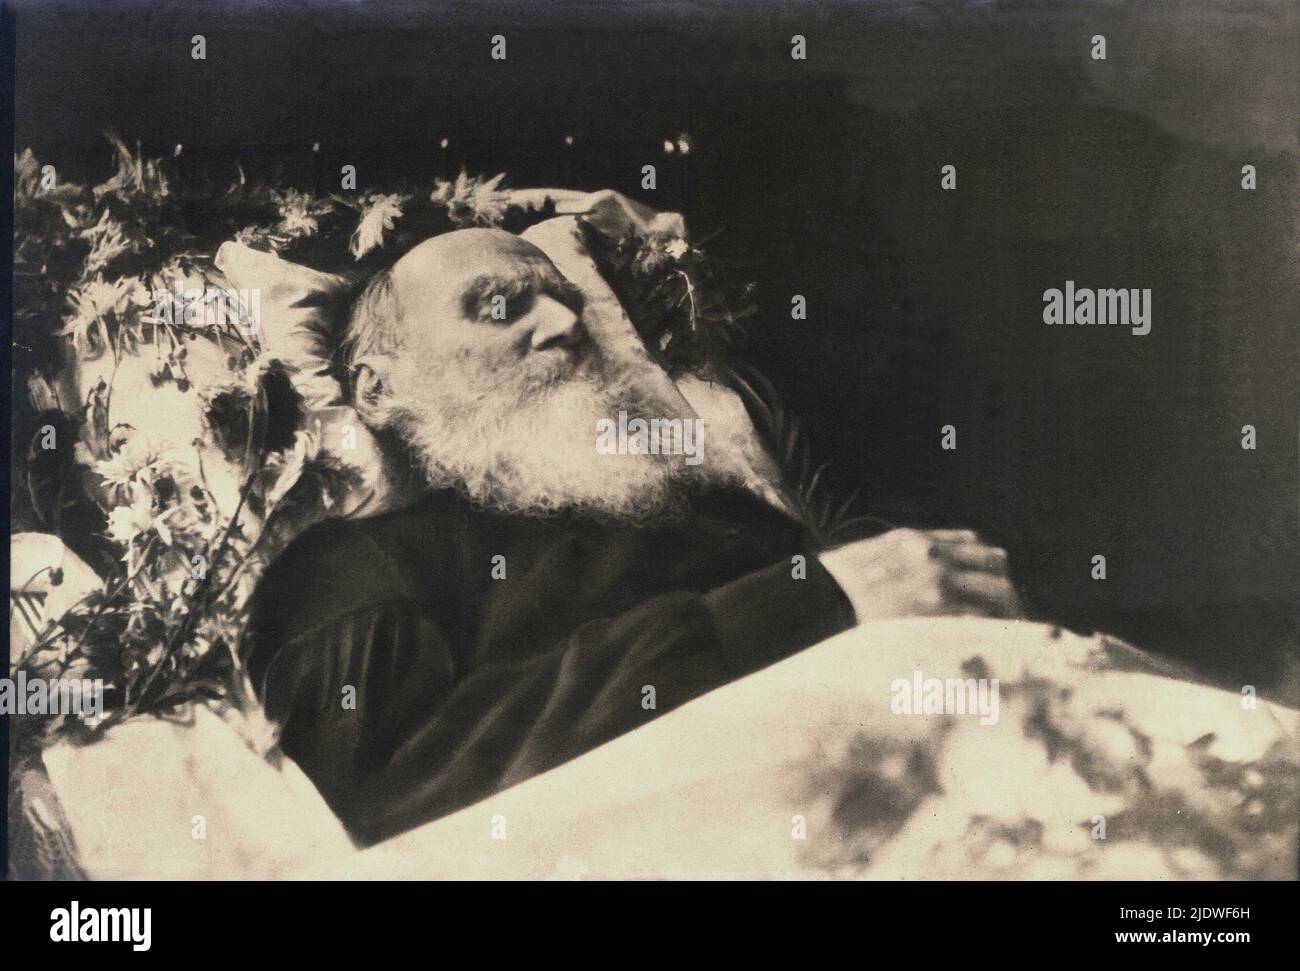 1910 , RUSSIE : le célèbre poète et écrivain russe Lev Nikolaevic TOLSTOJ ( 1828 - 1910 ) Rester mort au lit dans sa maison d'Astapovo - POST MORTEM - post mortem - SCRITTORE   LETTERATO - LETTERATURA - LITTÉRATURE - POÈTE - POETA - POÉSIE - POESIA - TOLSTOÏ - TOLSTOÏ - Leone - letto di morte - morto - defunto - cavere - longue barbe blanche - lunga barba bianca - RUSSIE - catafalco - pompe funebri onoranze - uomo vecchio anziano - ancien homme - --- Archivio GBB Banque D'Images